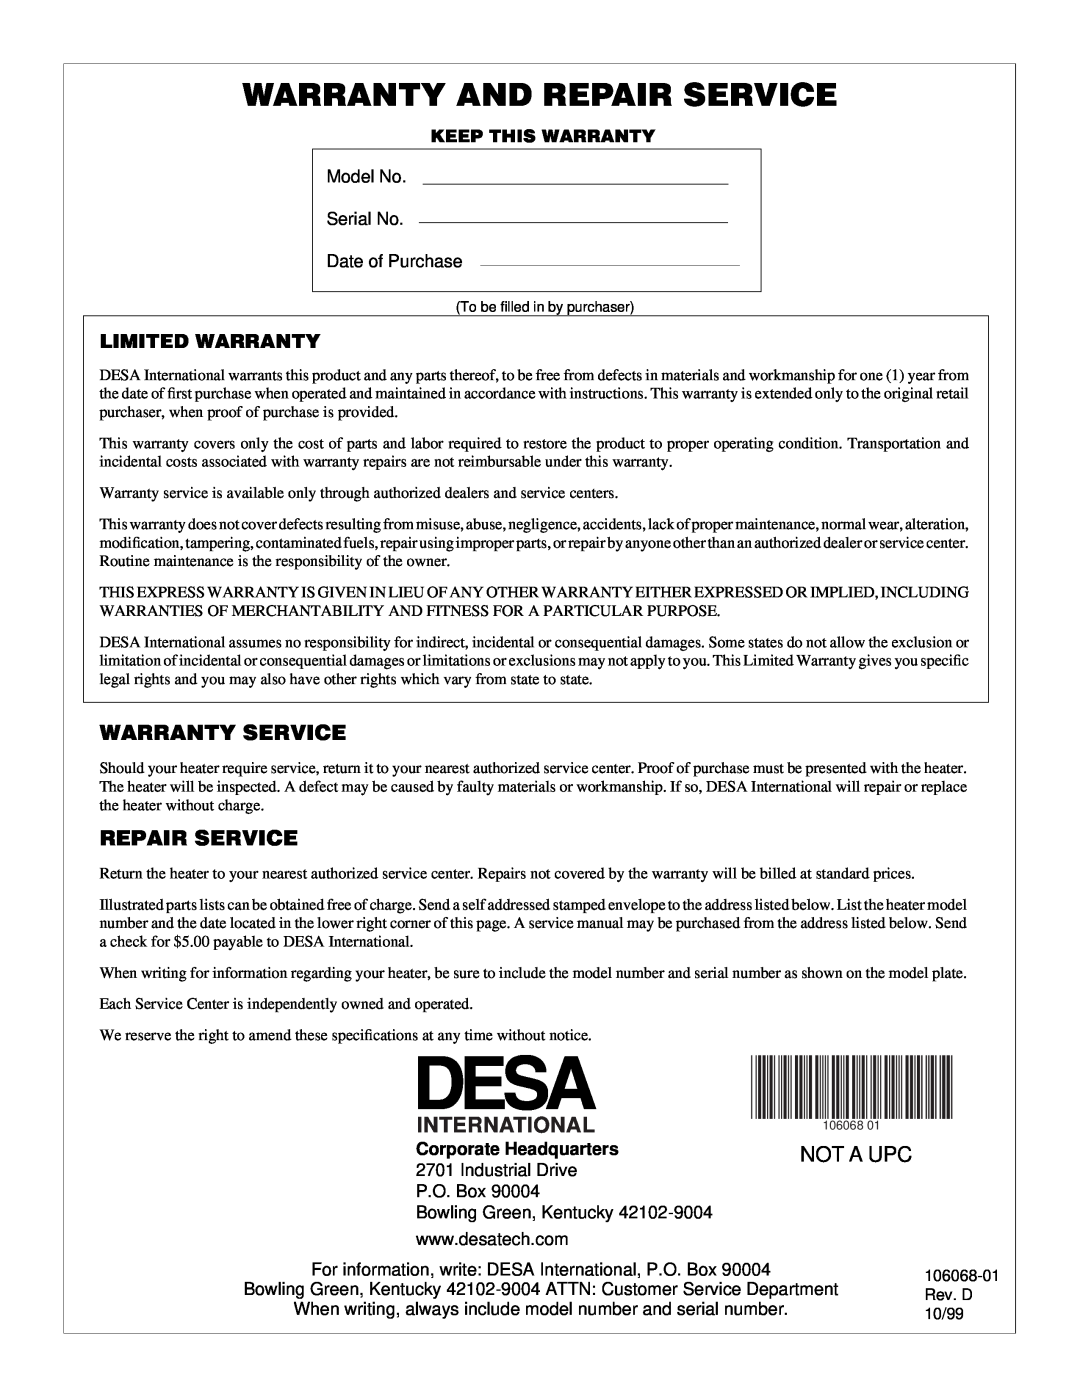 Desa REM200T Warranty And Repair Service, Warranty Service, International, Limited Warranty, Keep This Warranty, Not A Upc 